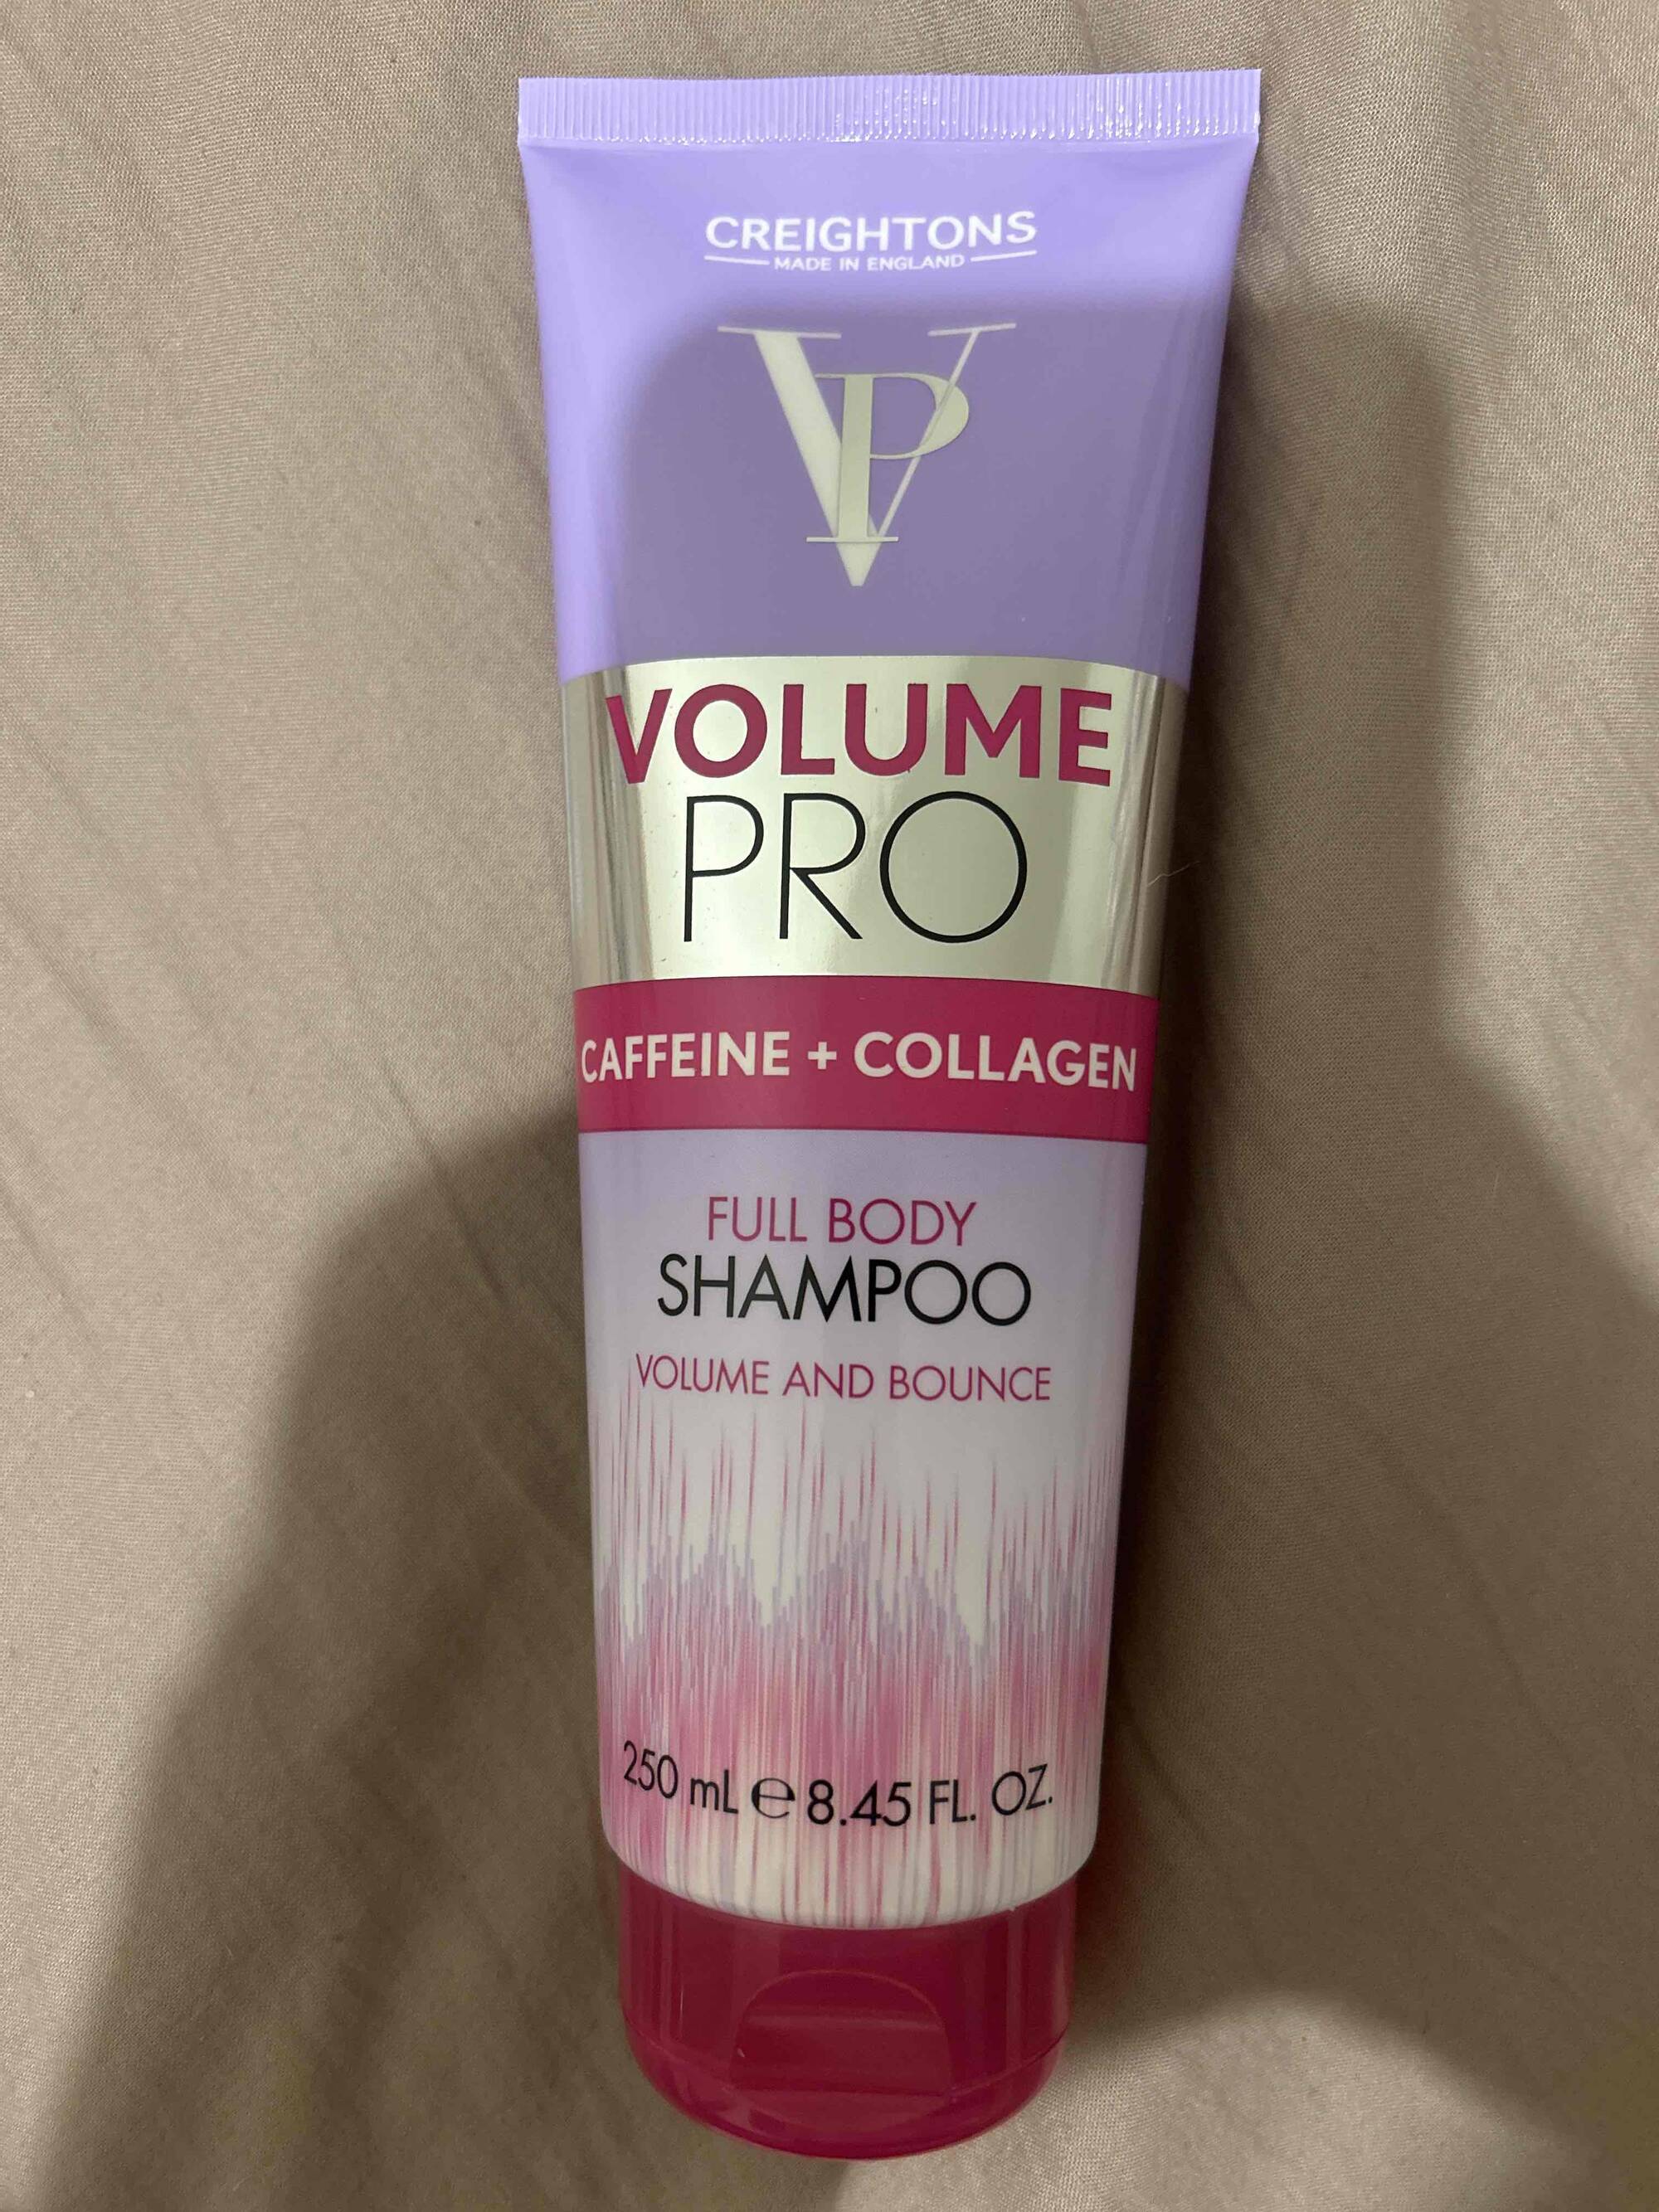 CREIGHTONS - Volume pro caffeine + collagen - Full body shampoo